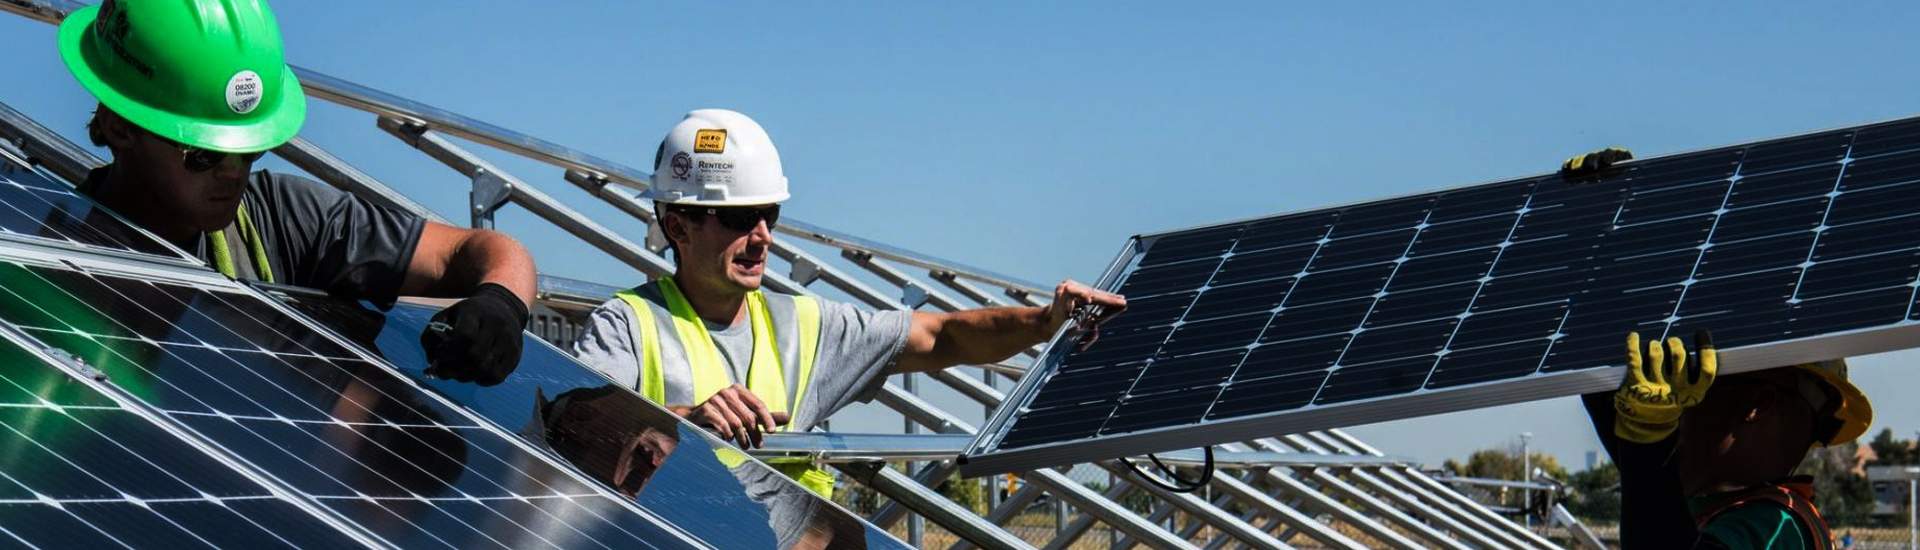 Men working solar panels